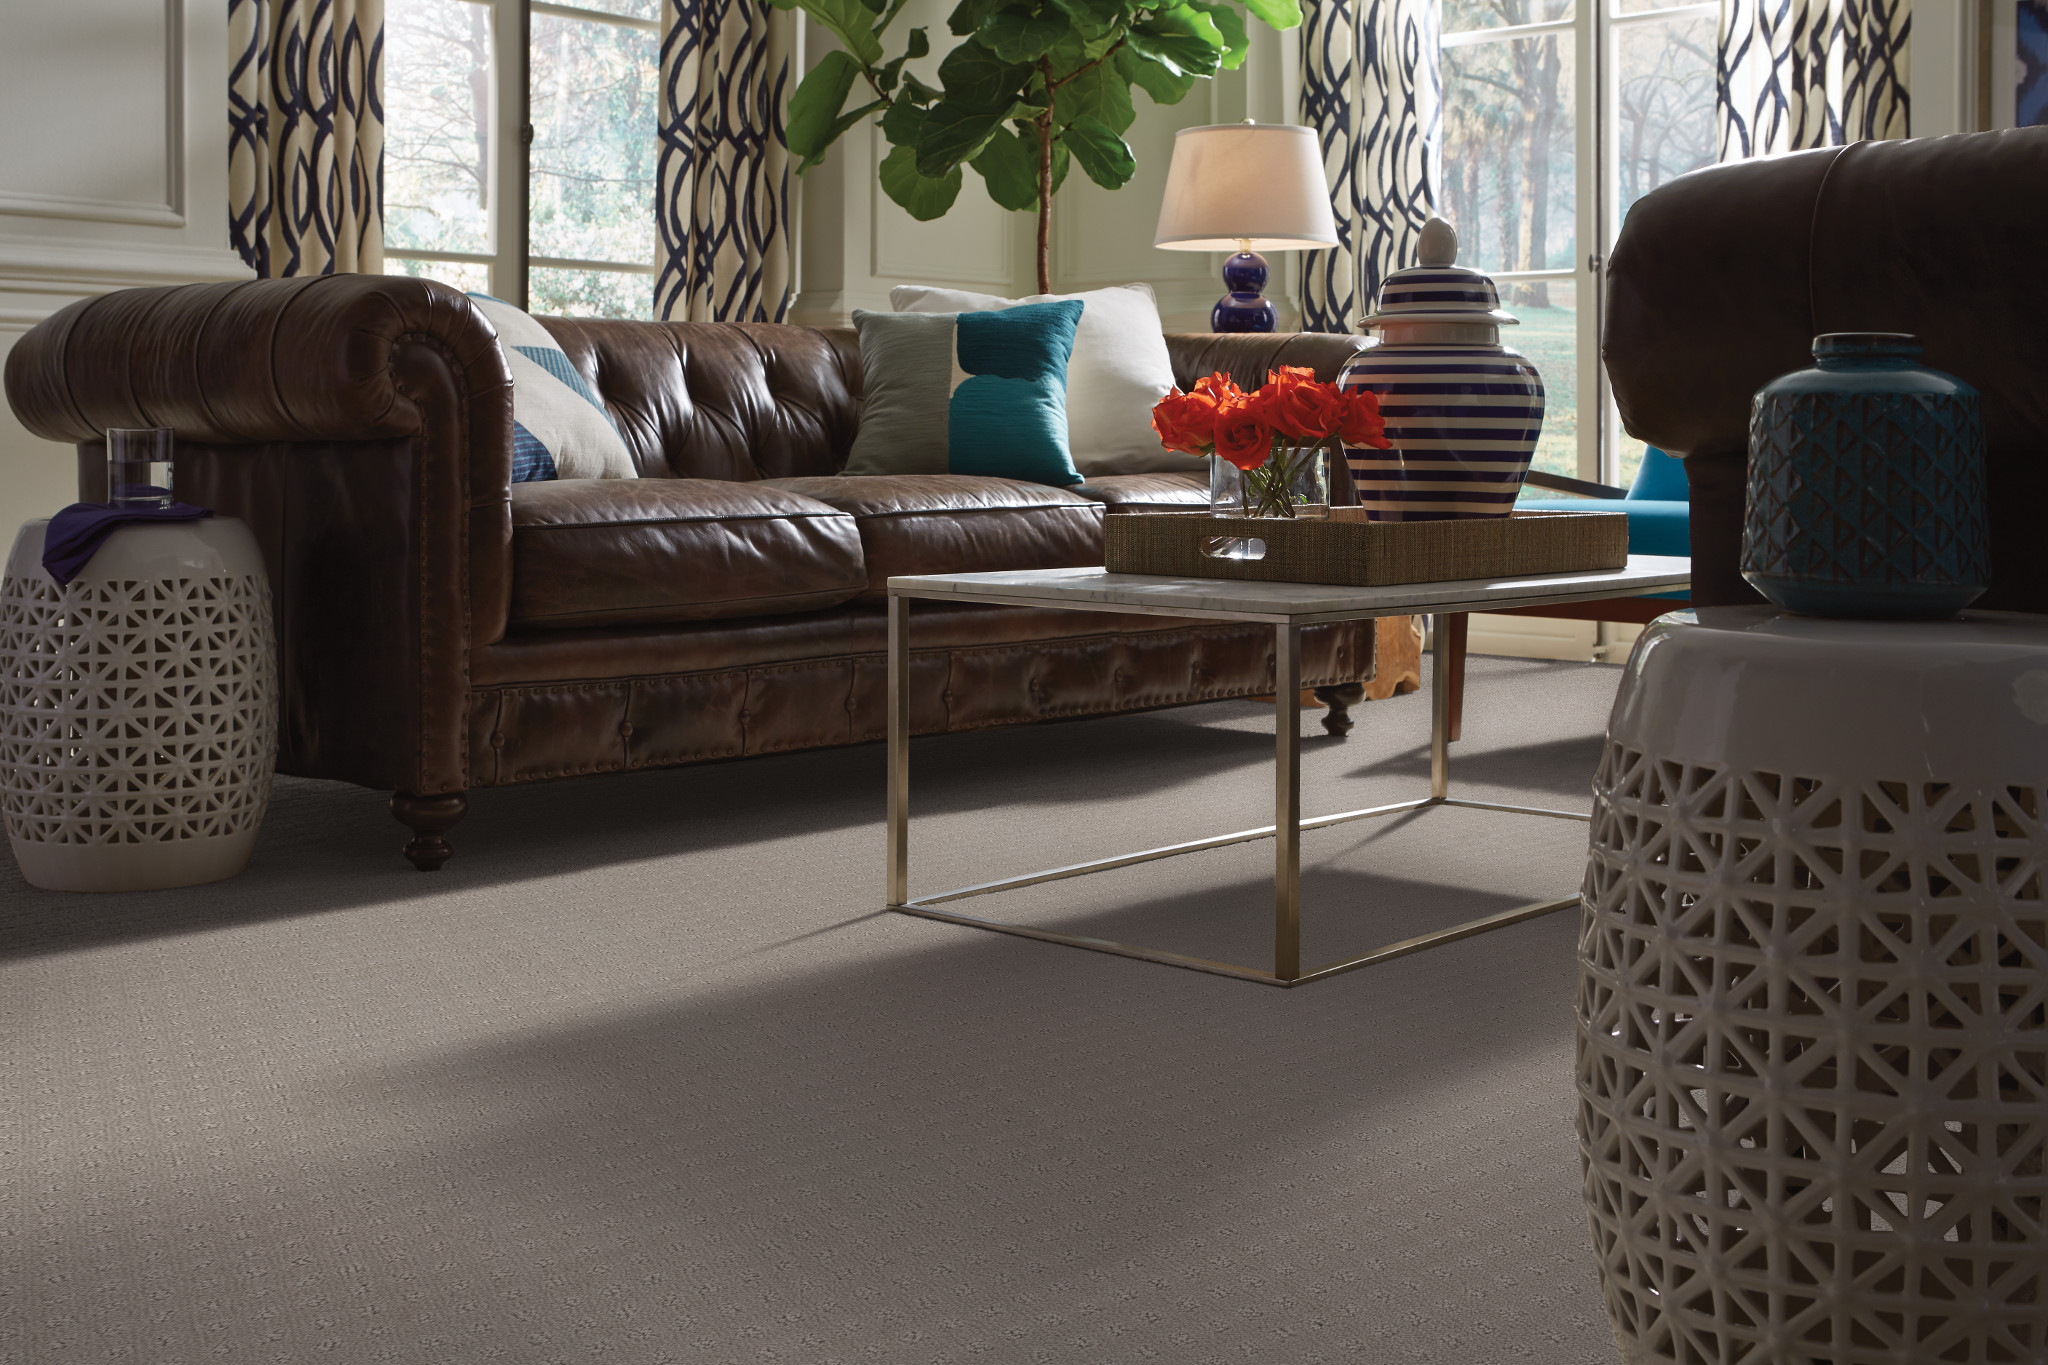 Living room image of No Worries carpet in color Metallic